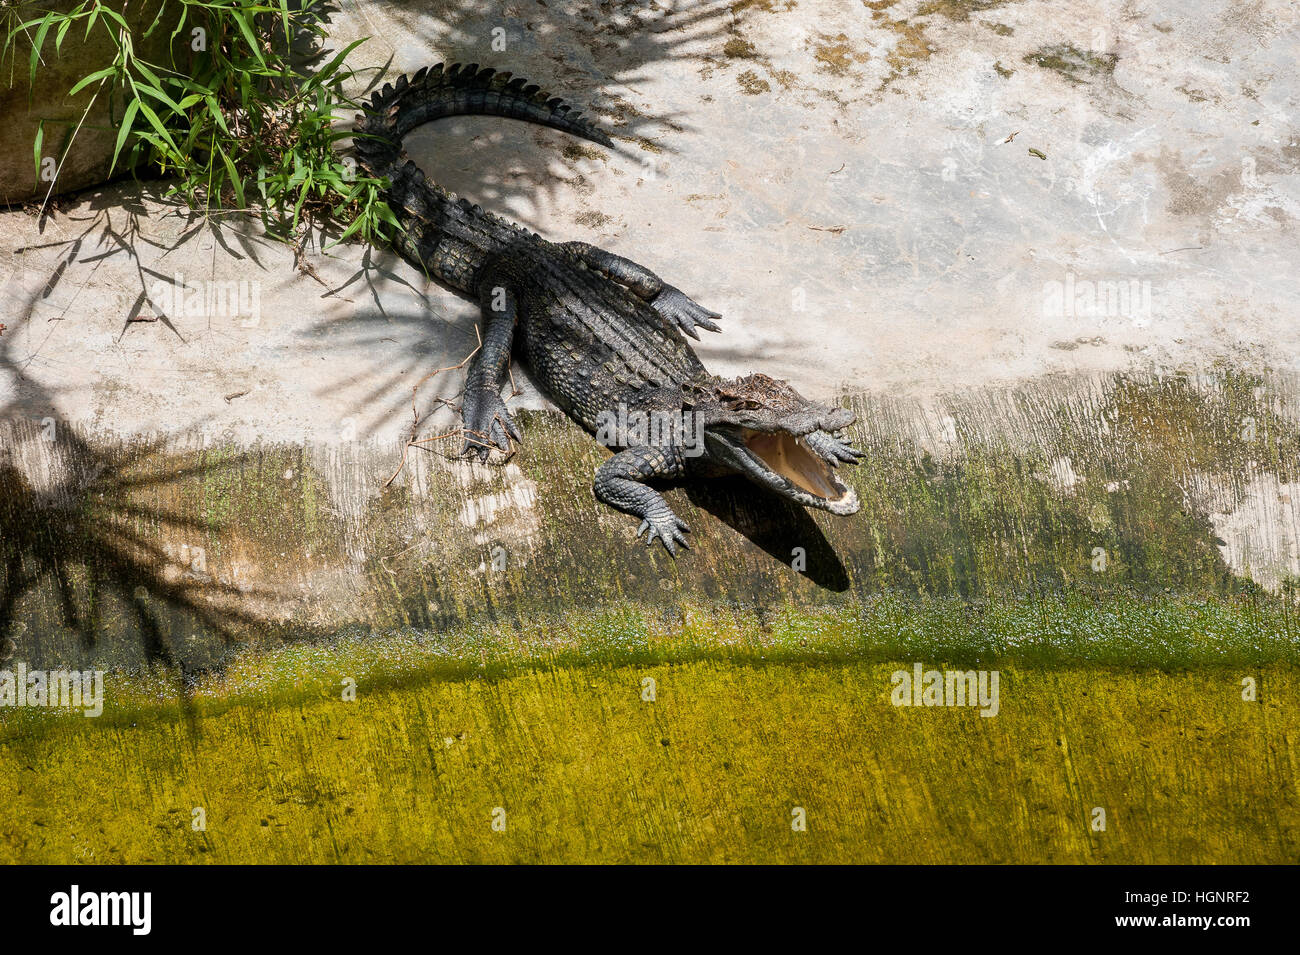 A crocodile basks on land under the shade of the palms opening hole. Crocodile farm in Thailand, on Phuket island Stock Photo